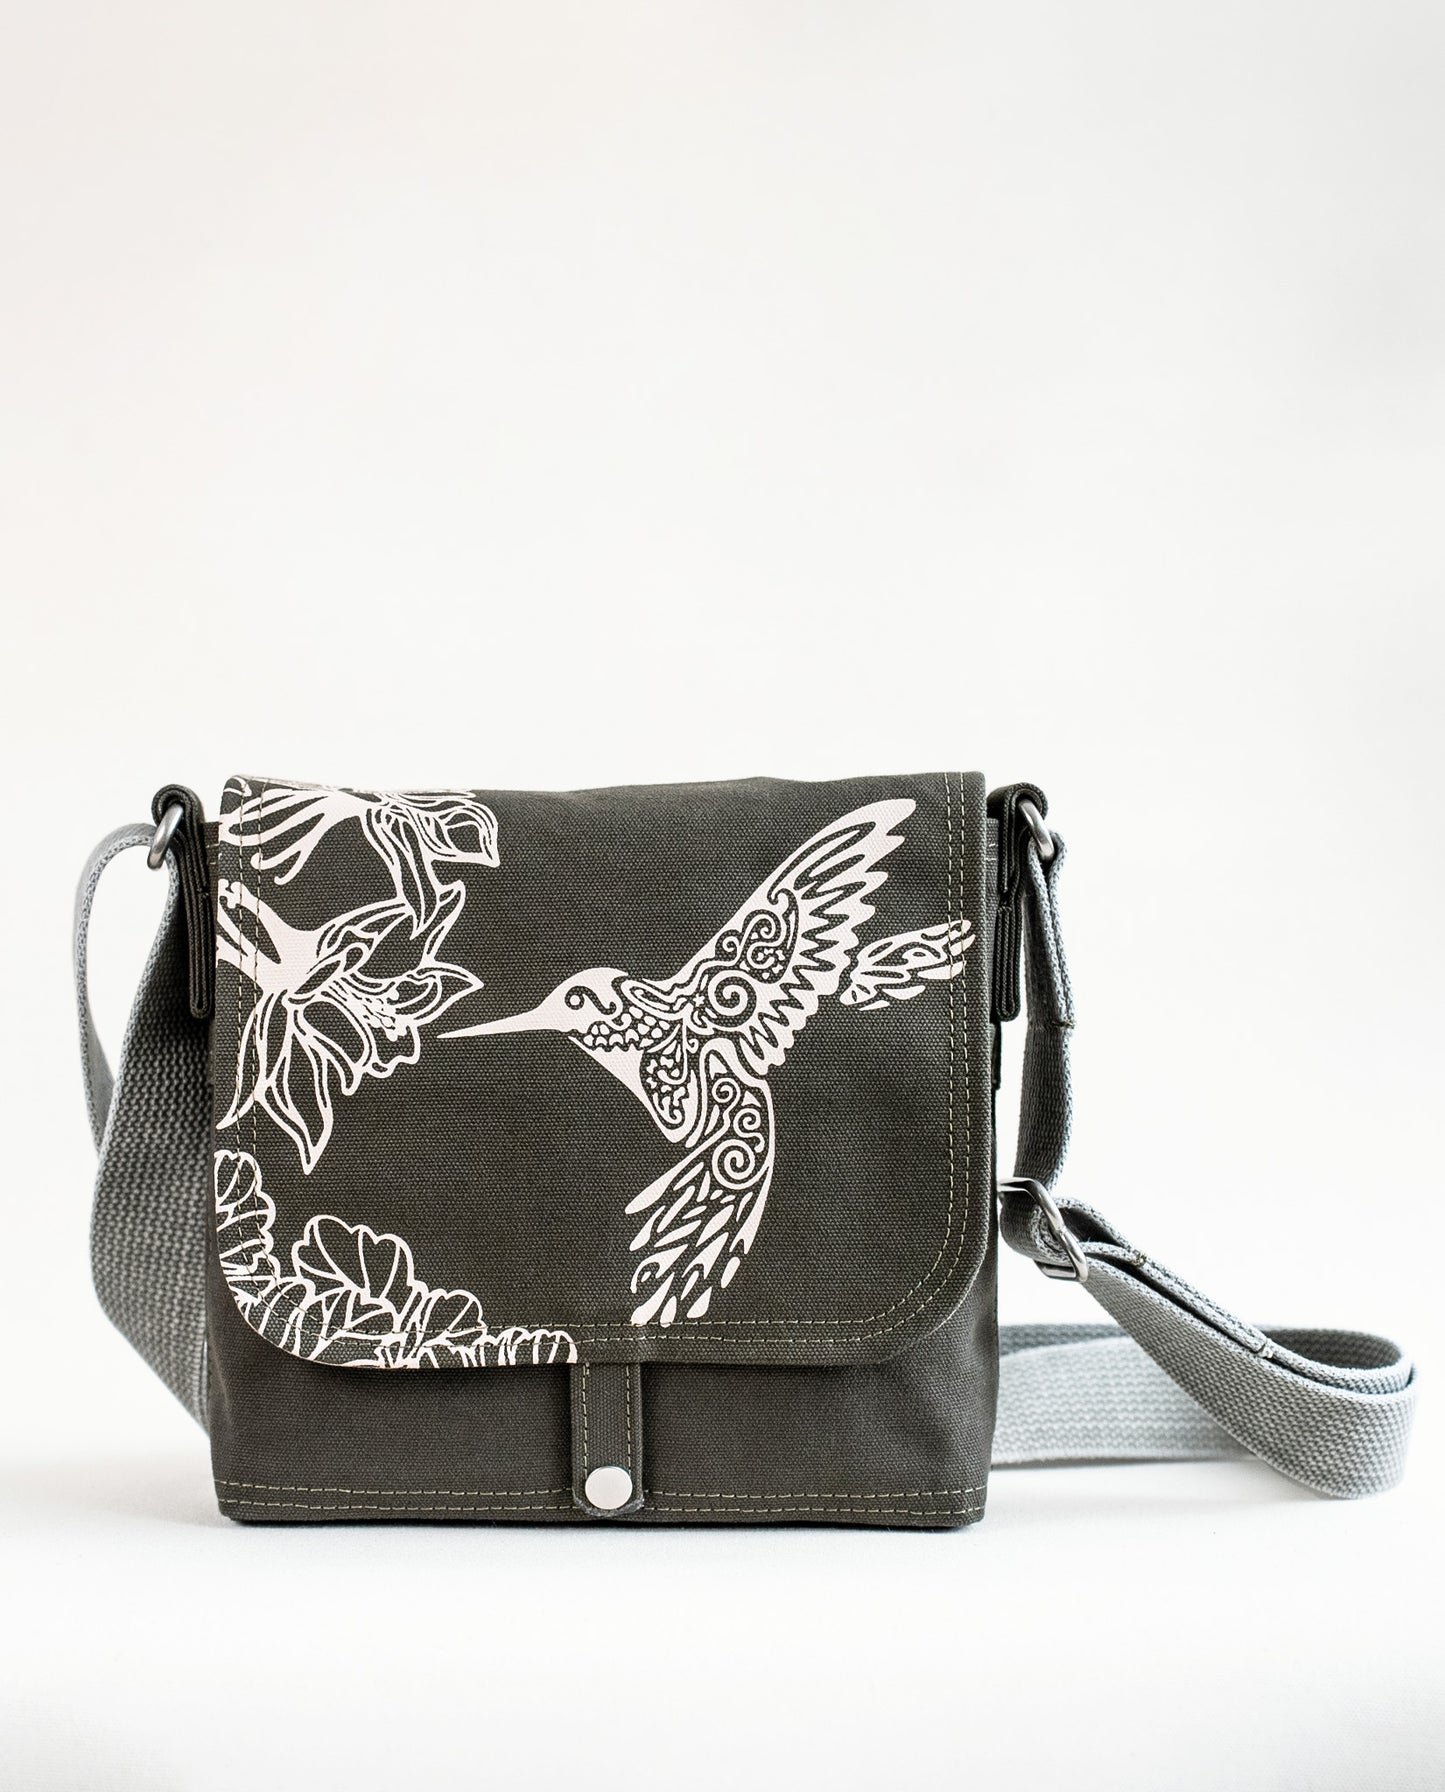 Front exterior of Dock 5’s Hummingbird Canvas Mini Messenger Bag in olive featuring art from owner Natalija Walbridge